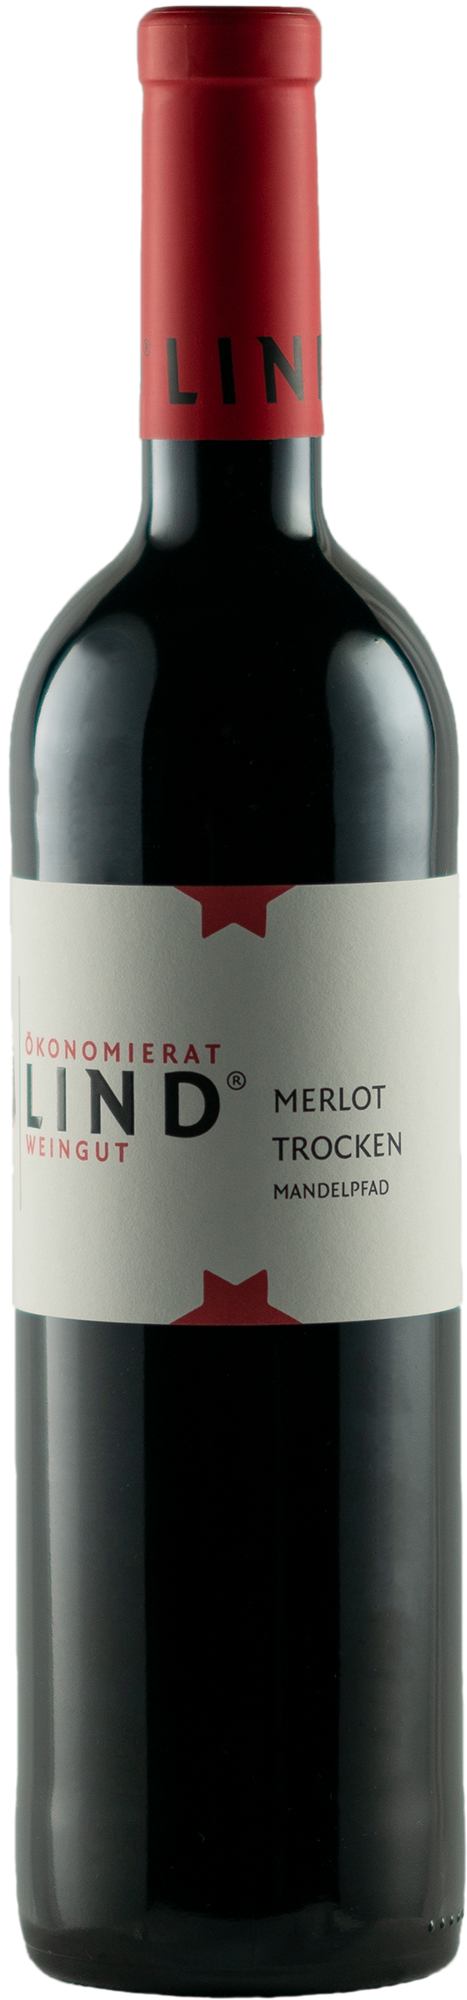 2020 Merlot trocken Mandelpfad 0,75 L - Weingut Ökonomierat Lind